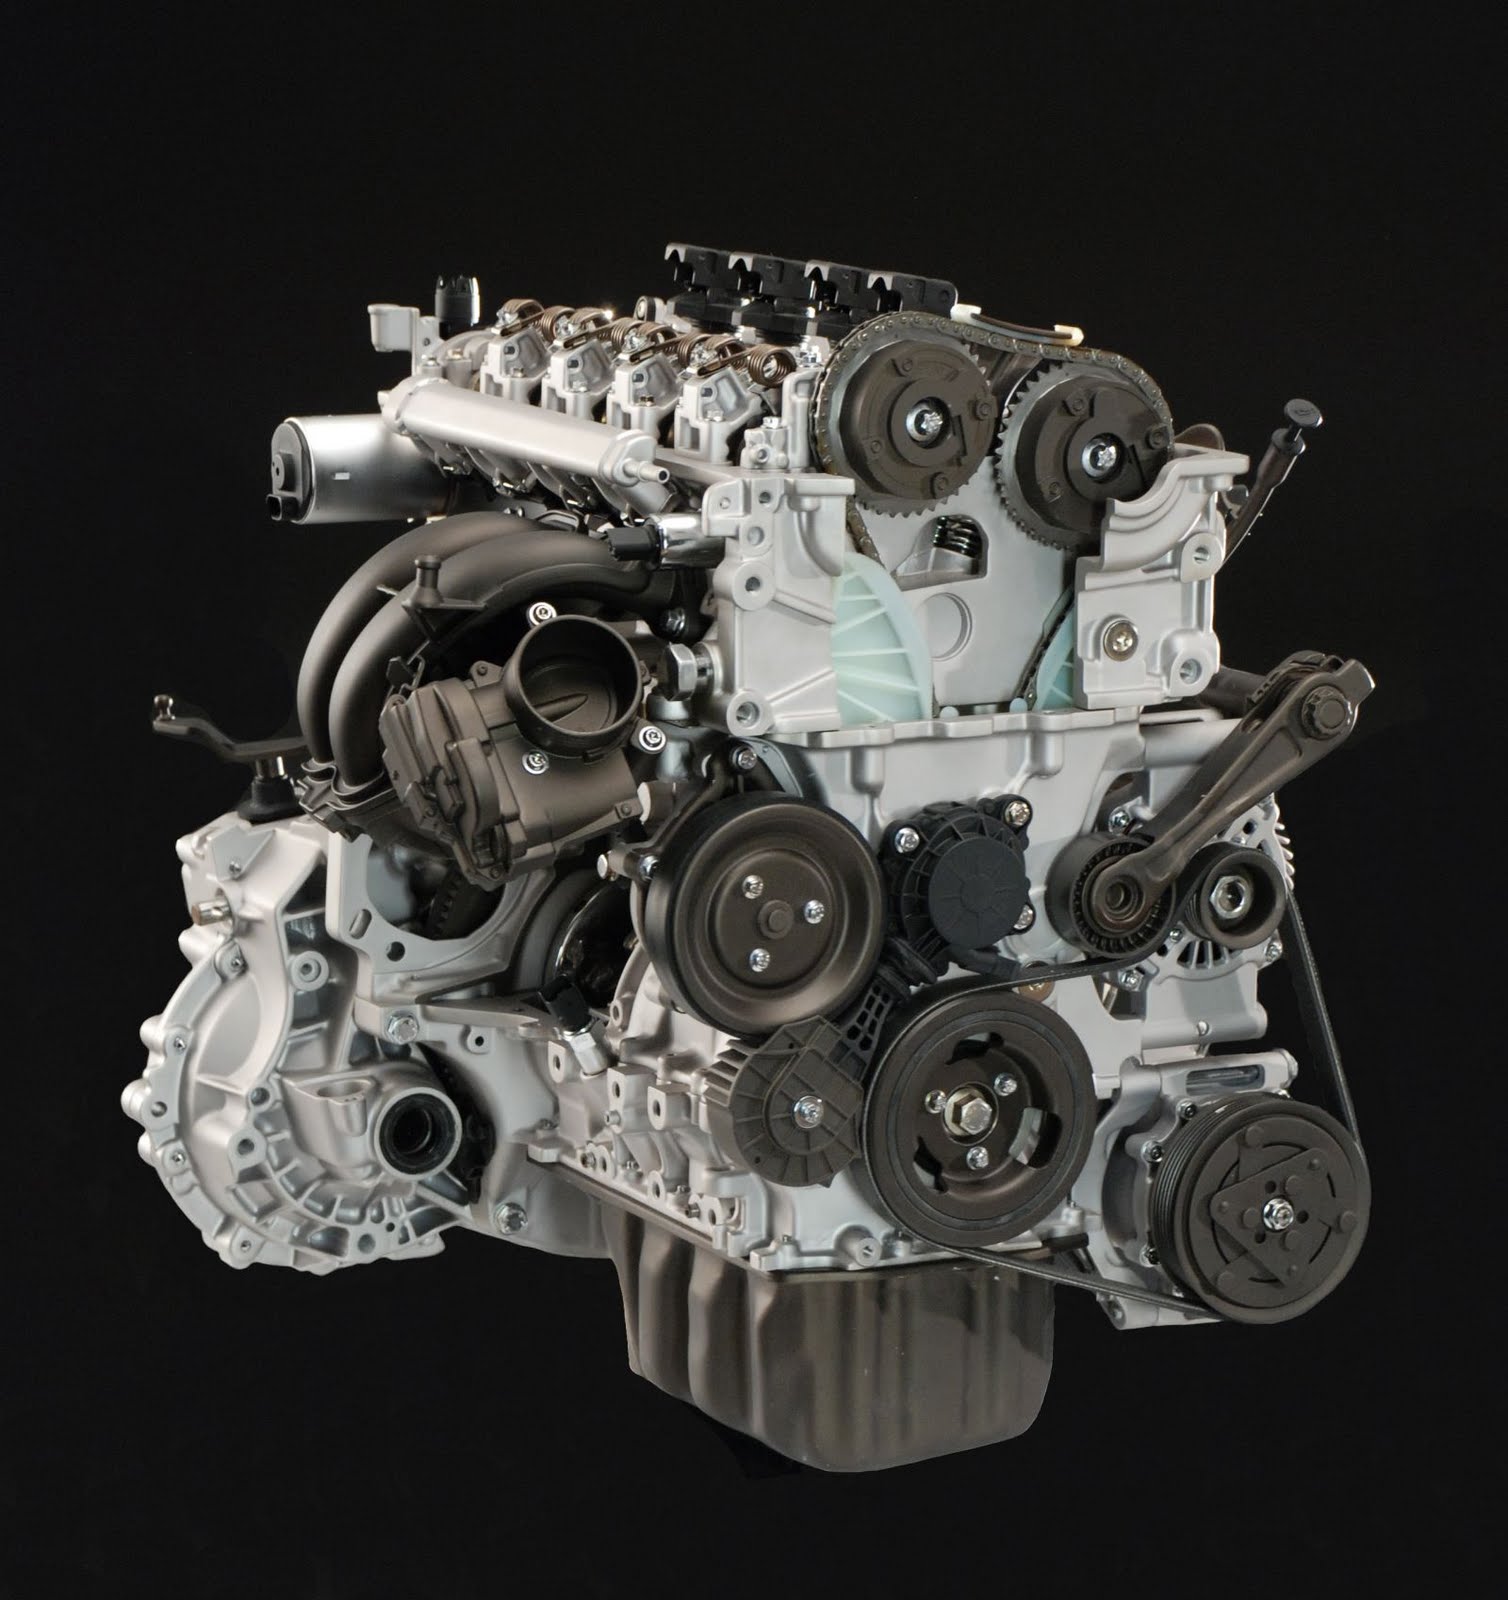 Bmw psa 1.6 thp engine